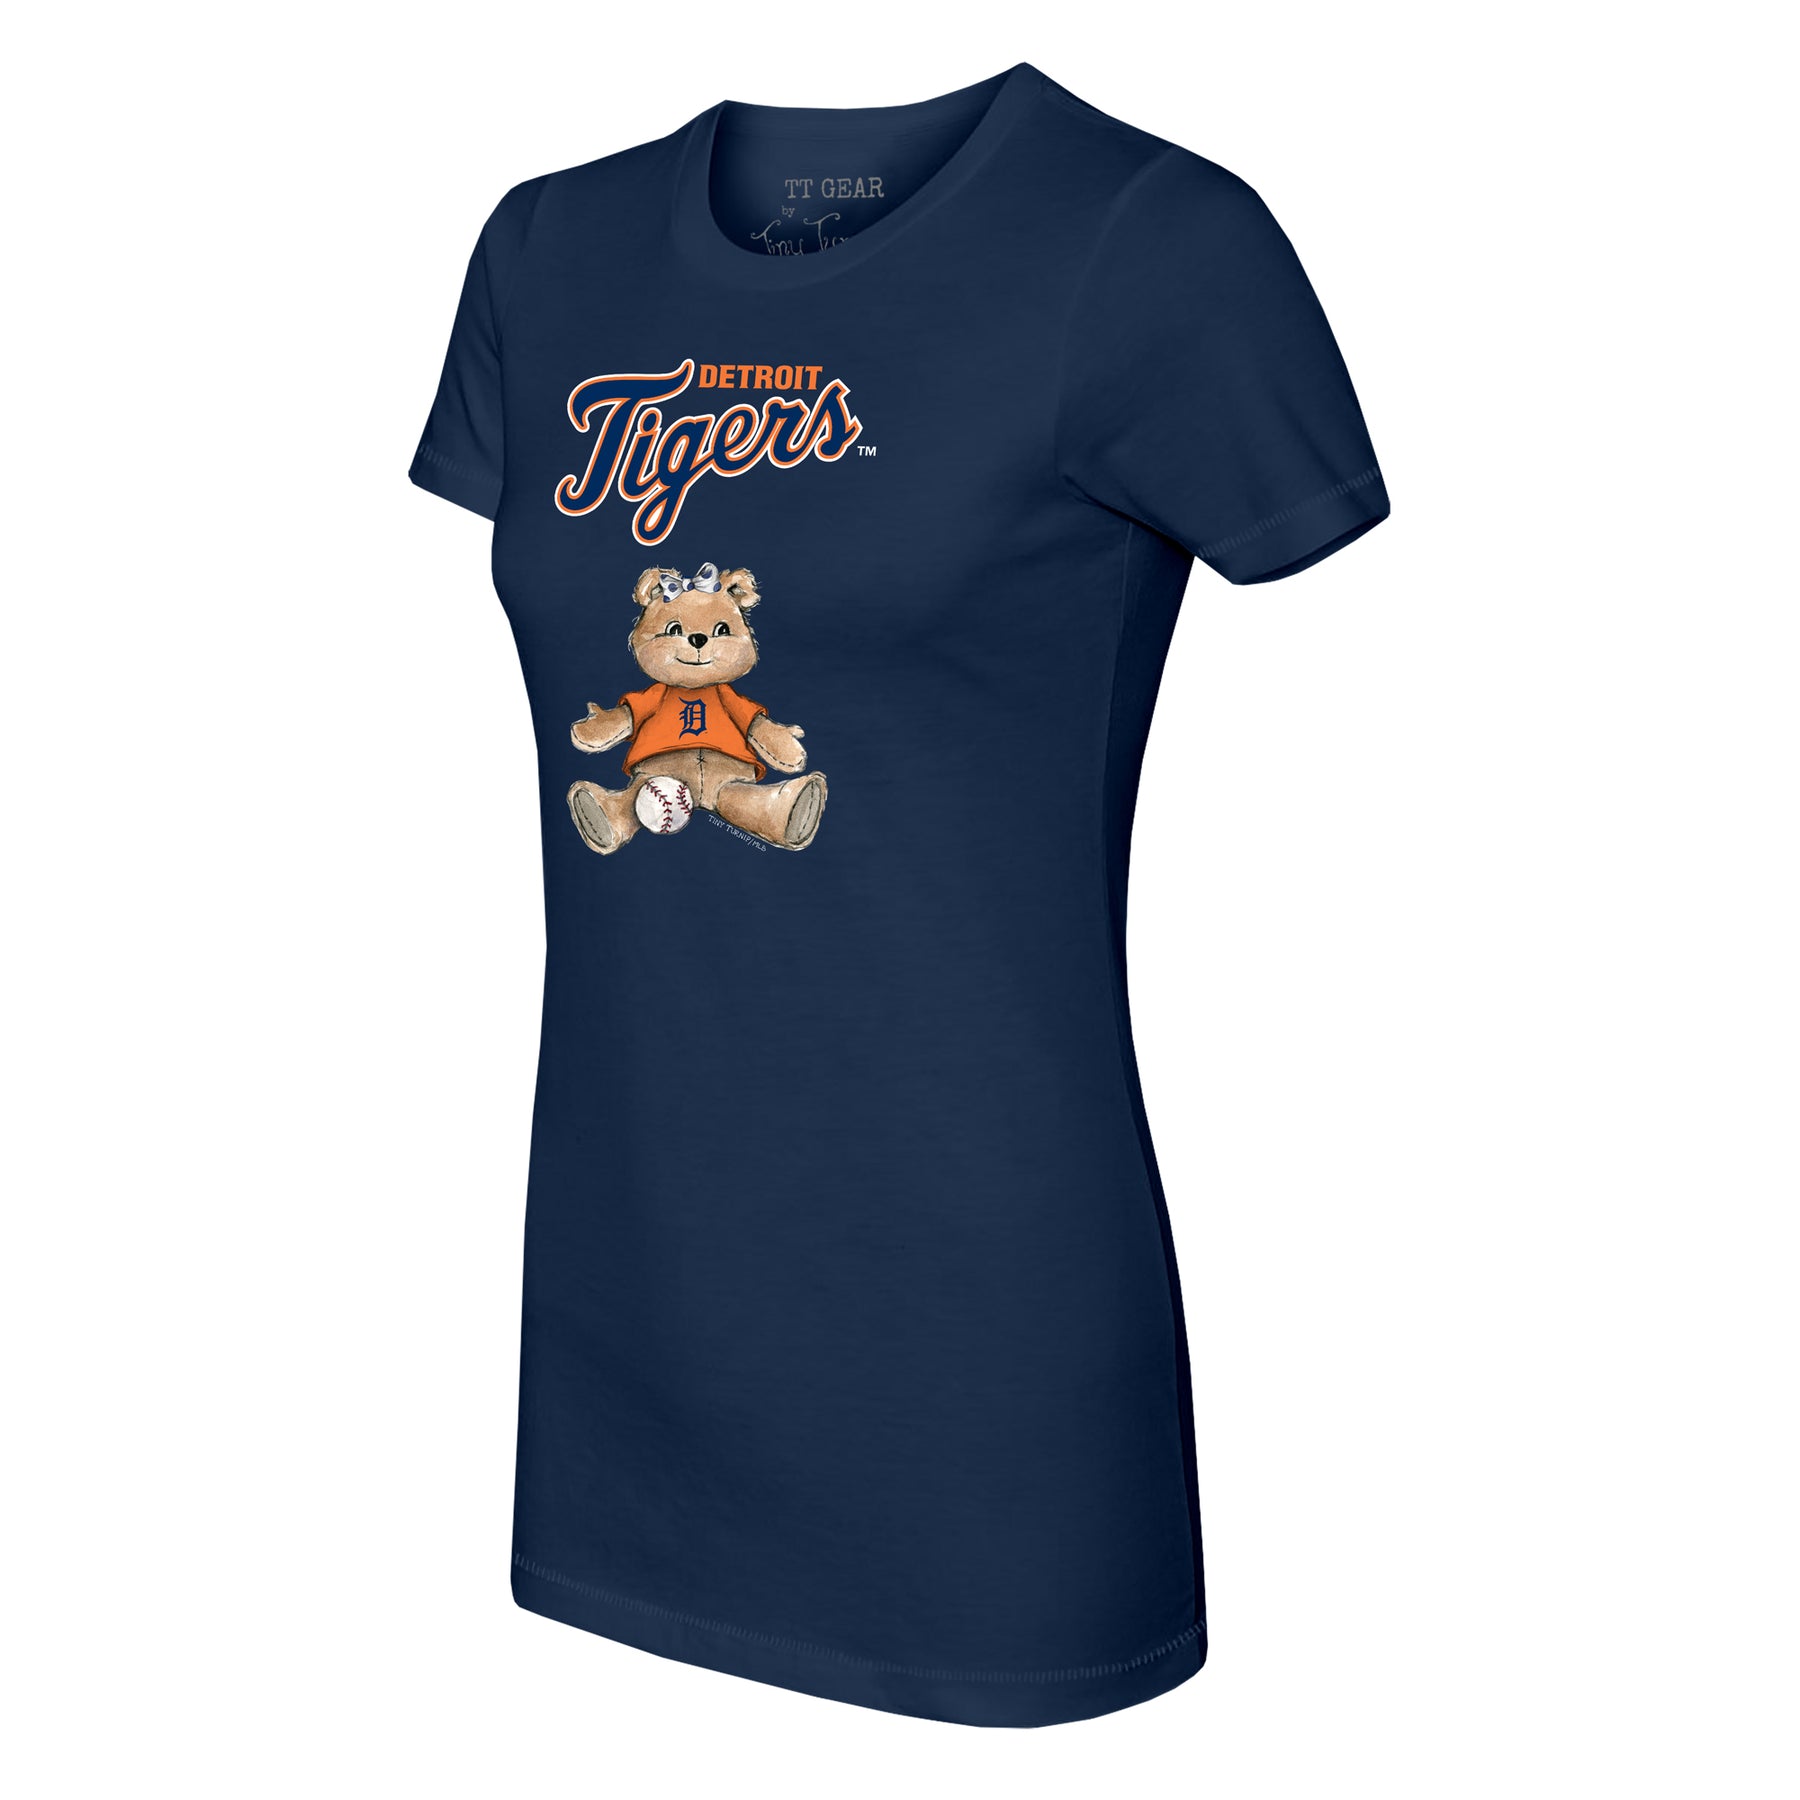 Women's Tiny Turnip Navy Detroit Tigers Girl Teddy T-Shirt Size: Large